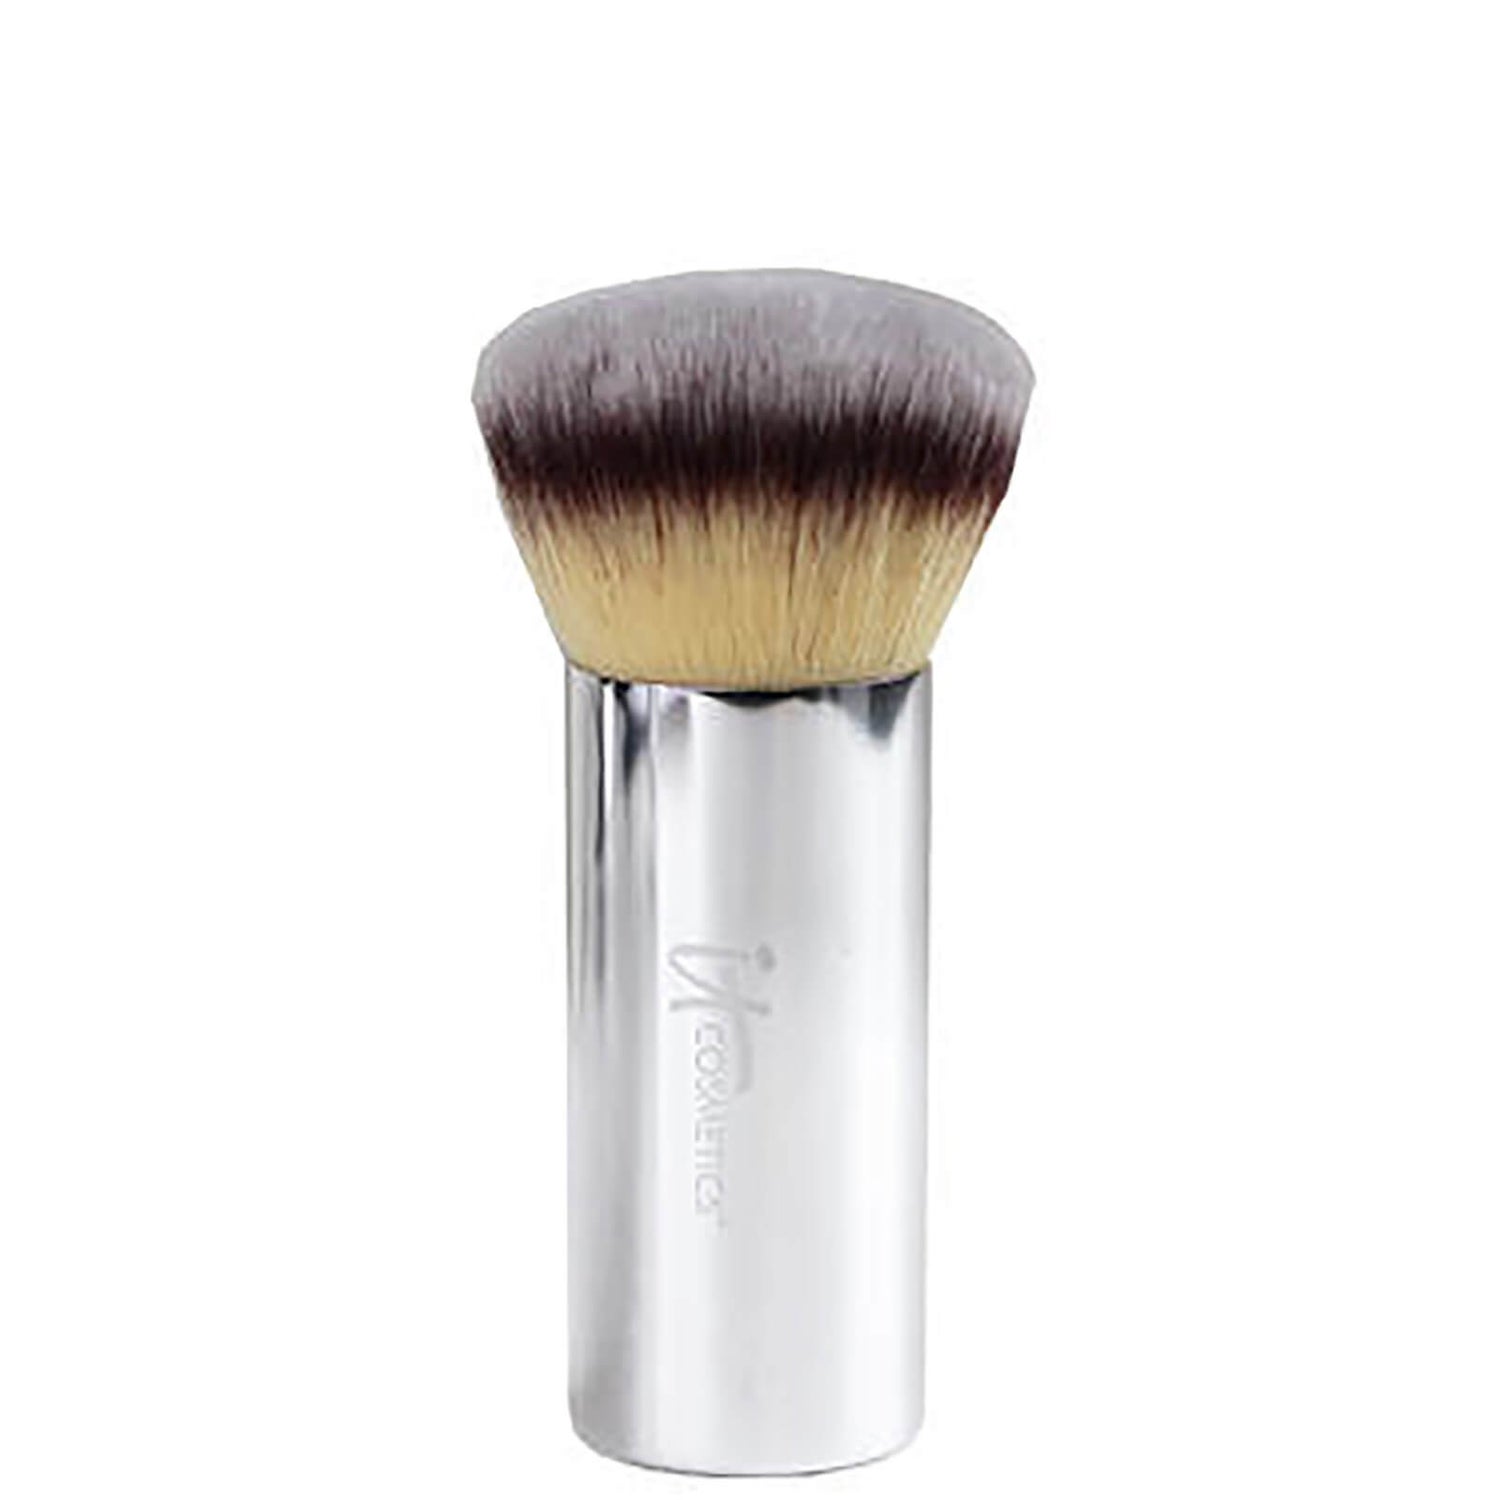 IT Cosmetics Complexion Perfection Buki Brush